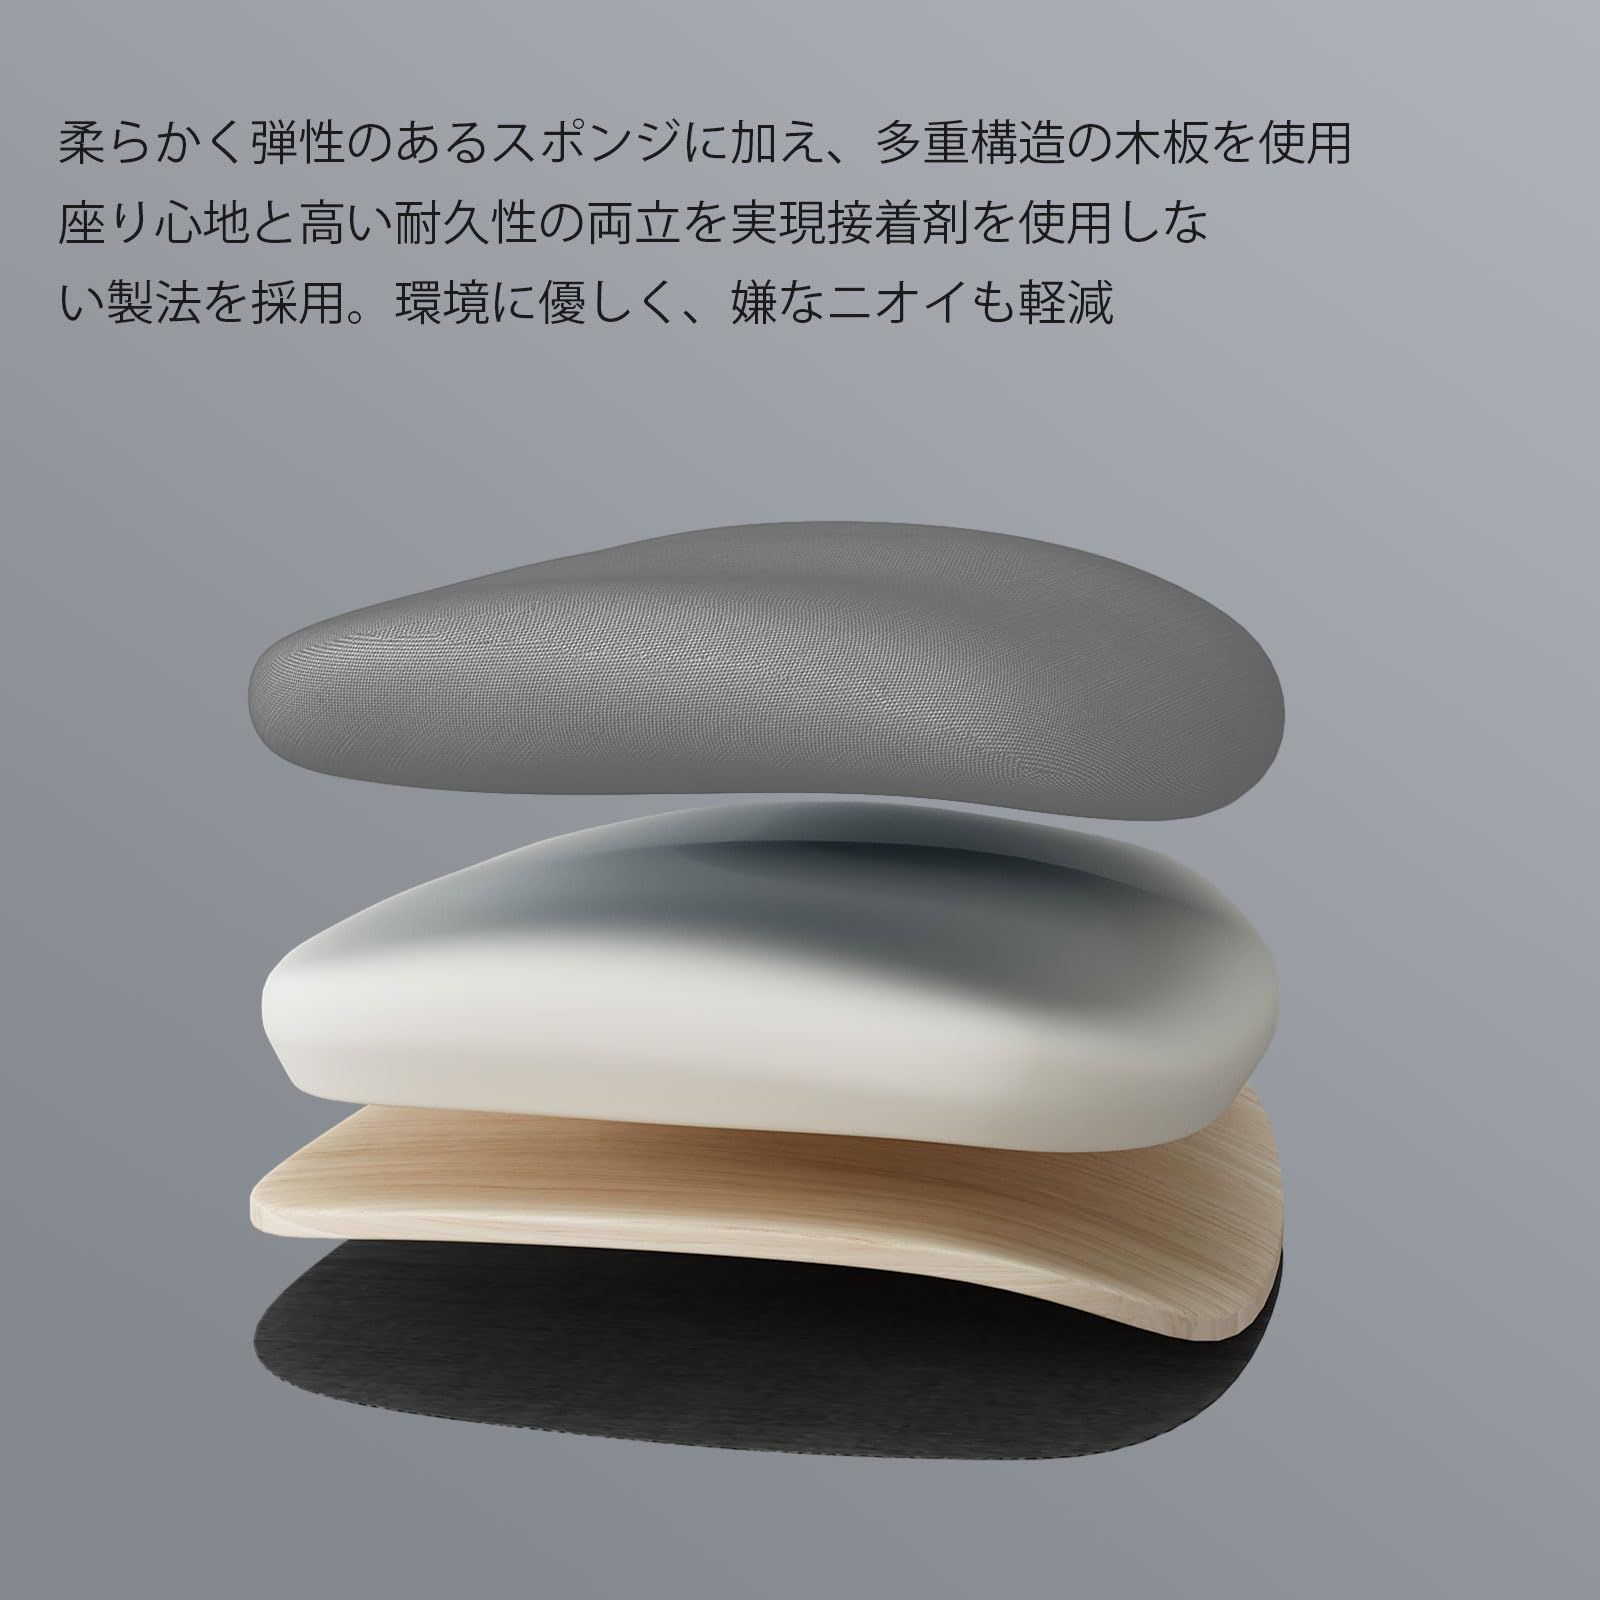 Takumi Detailオフィスチェア デスクチェア メッシュ腰部支撑 通気性 ...